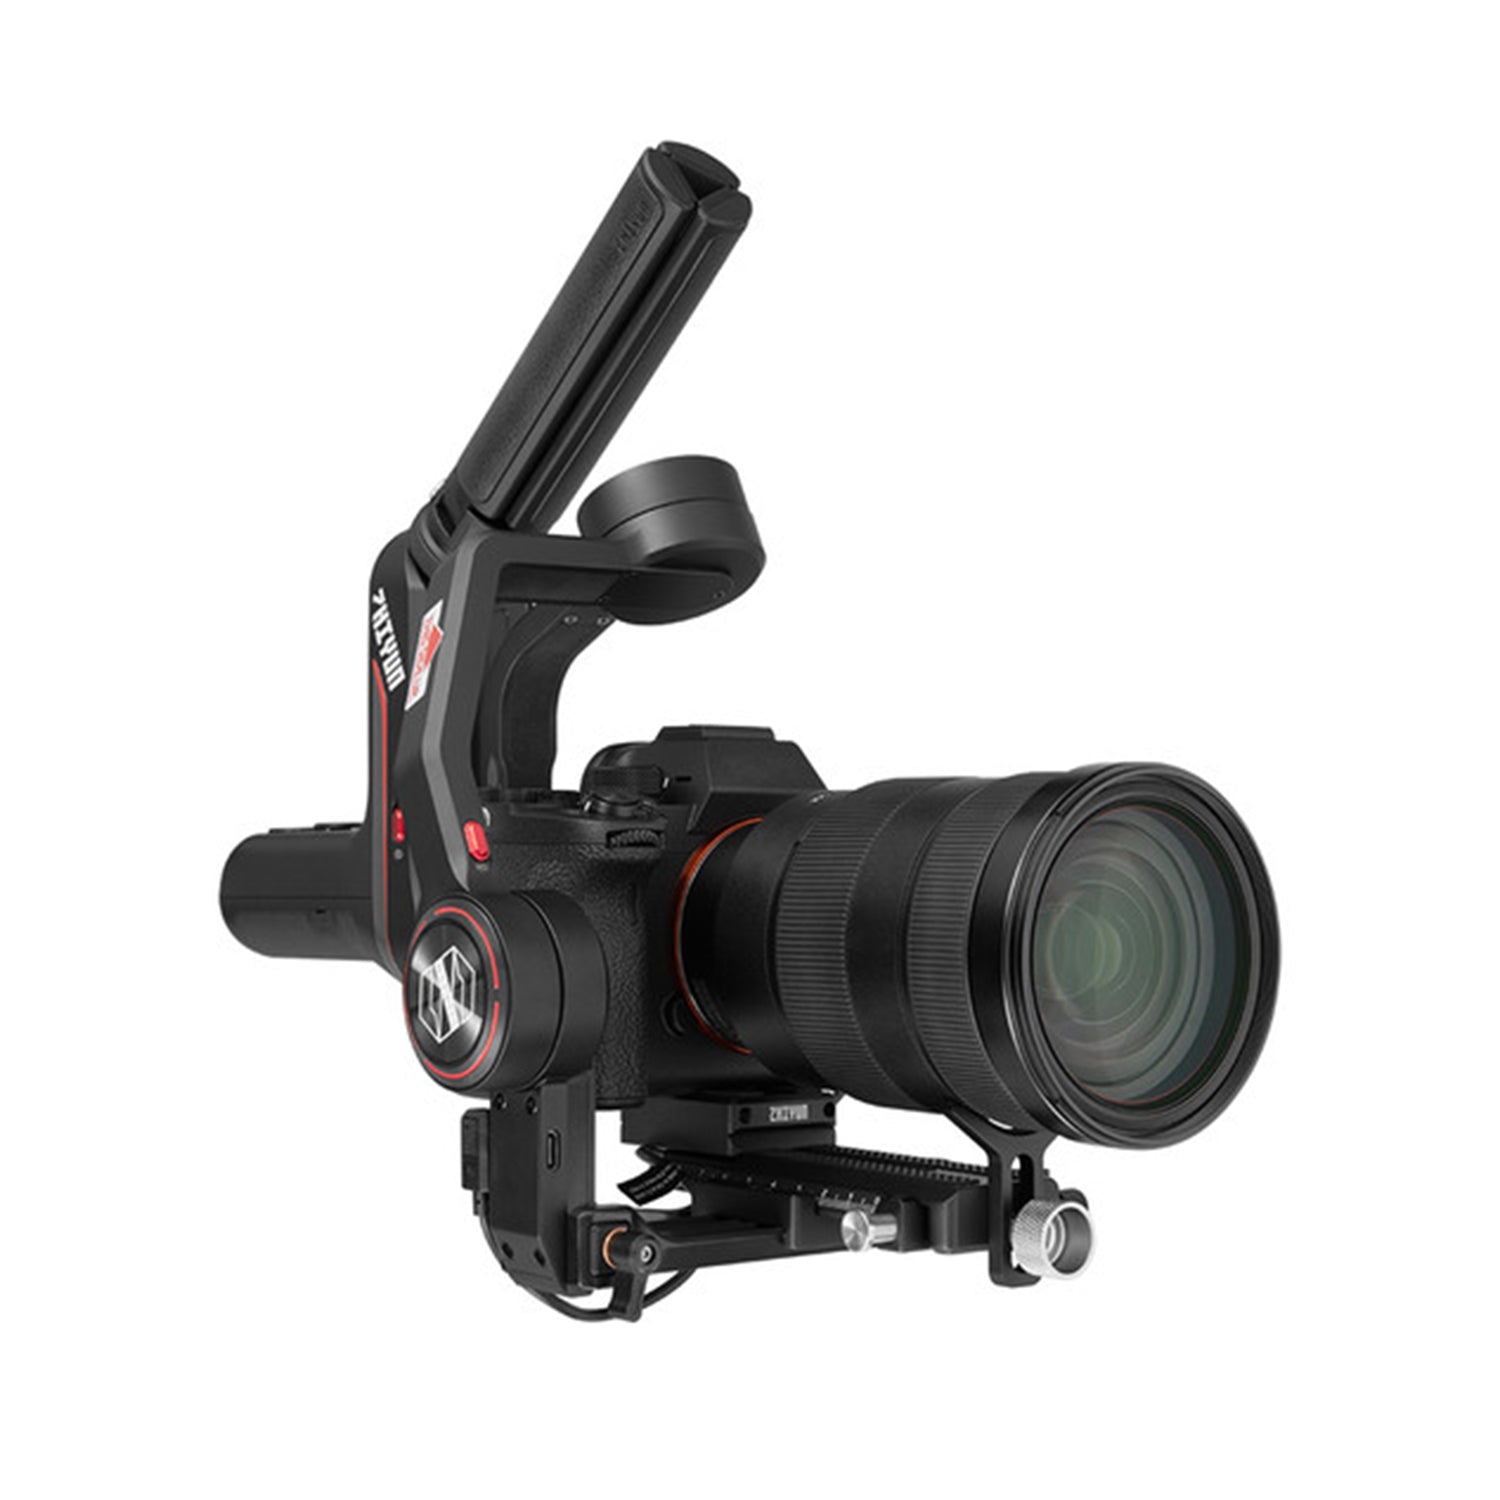 Feiyu Pocket 3 4K Vlog Action Camera 3-axis Gimbal Magnetic Body 130° FOV  APP